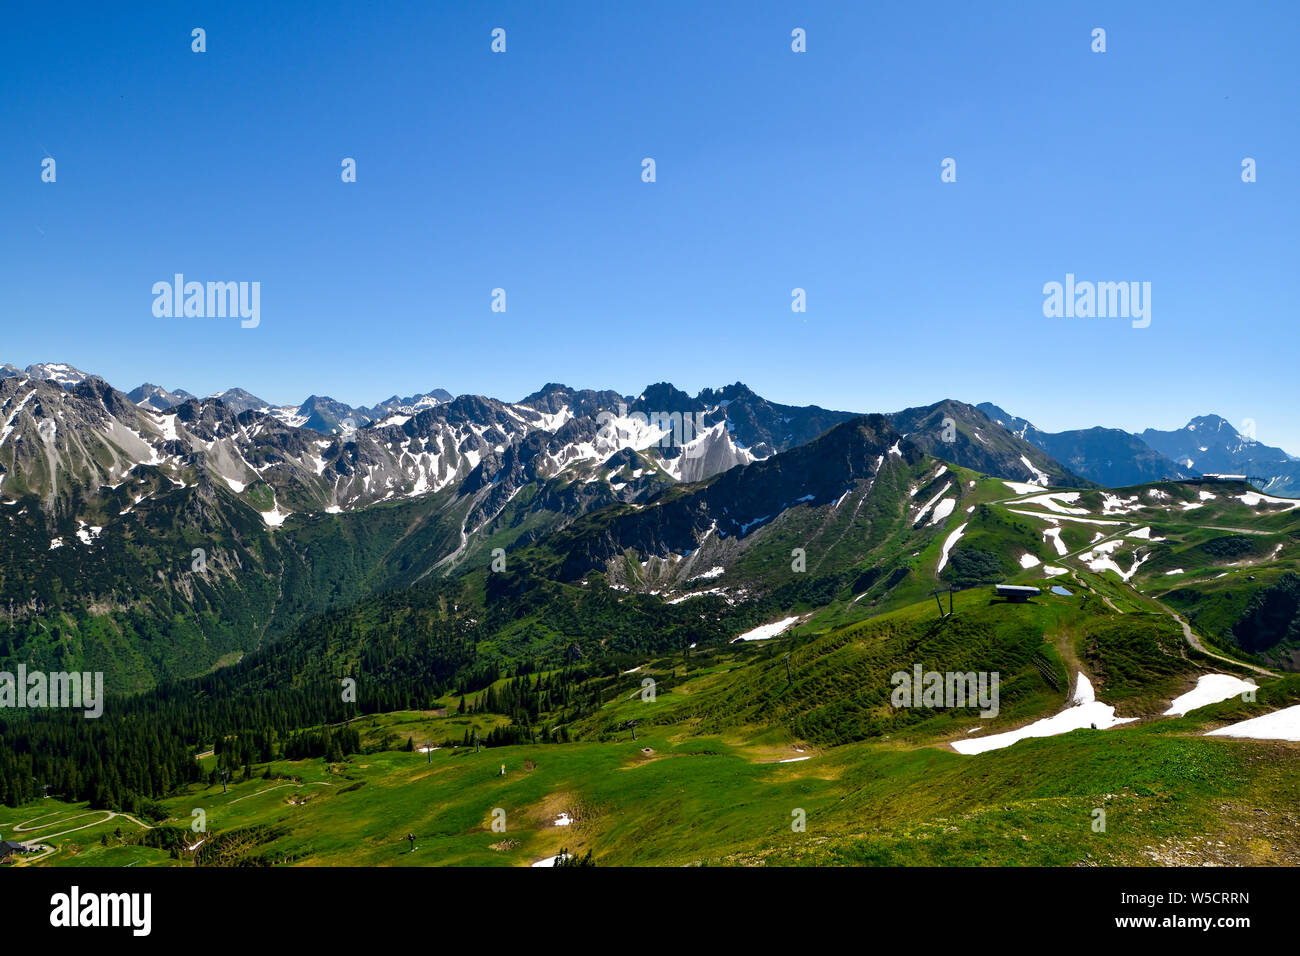 Idyllic mountain landscape in the Alps. Stock Photo